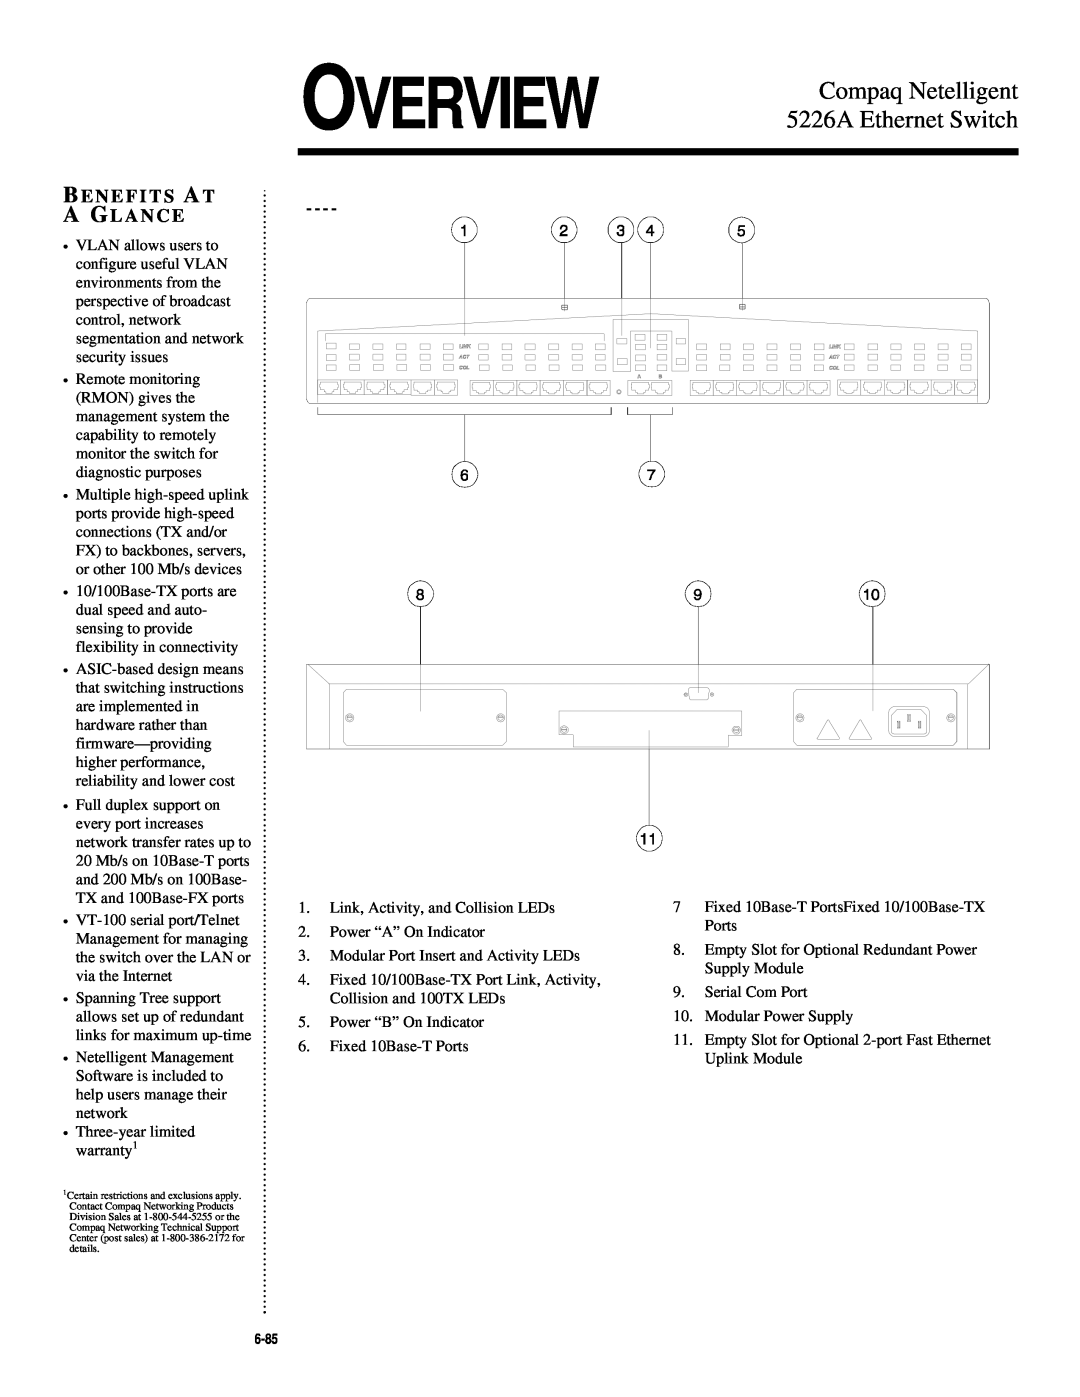 Compaq warranty Overview, Compaq Netelligent 5226A Ethernet Switch, B E N E F I T S A T A G Lance 